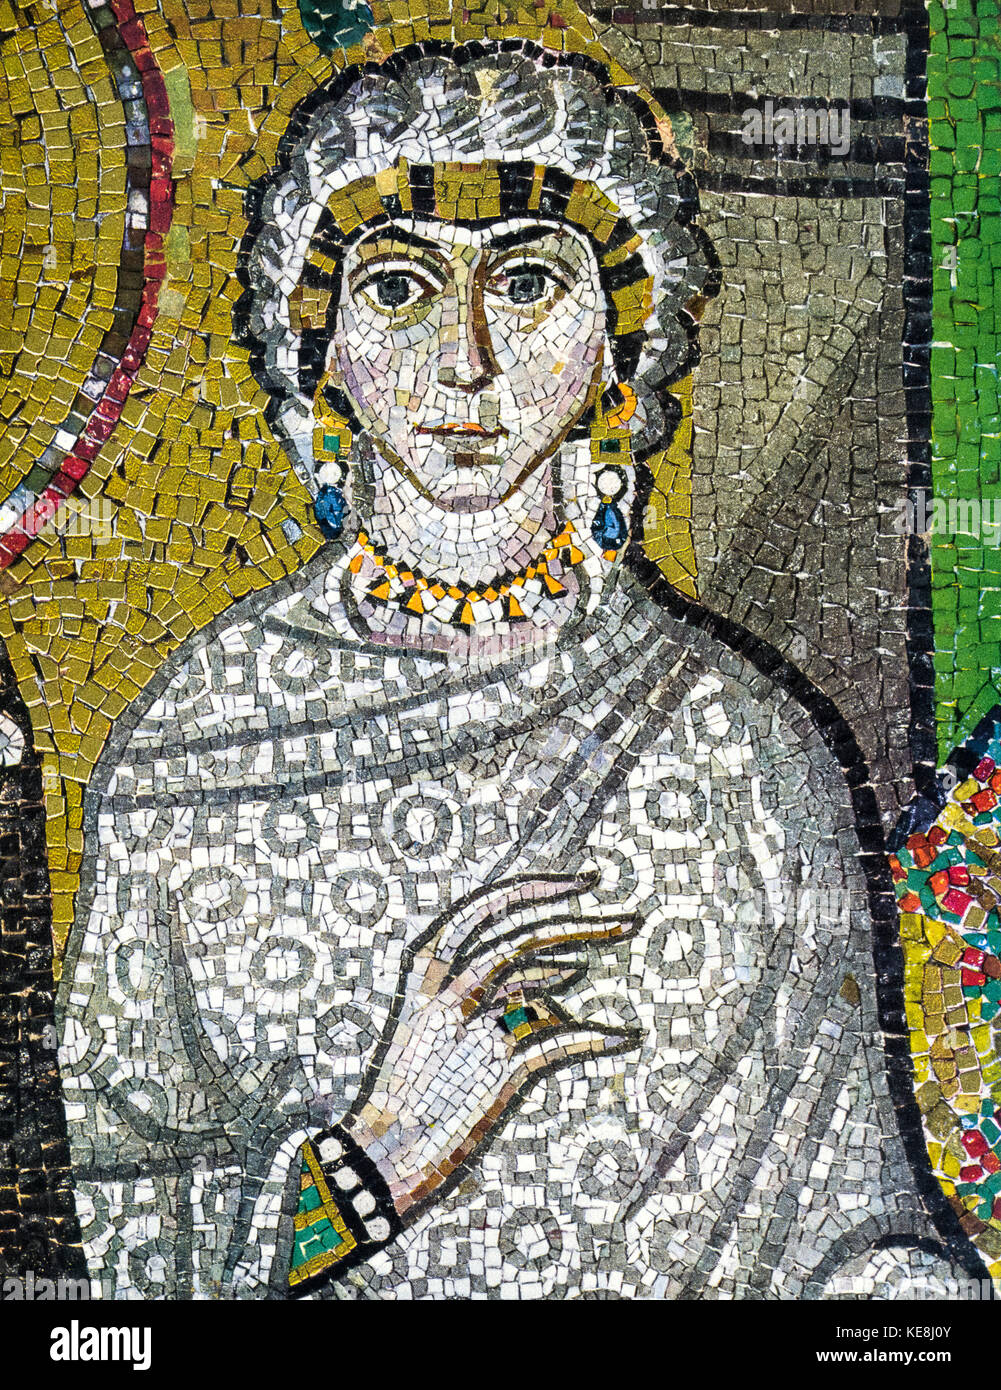 Italien Emilia Romagna ravenna Basilika Saint vitale Chor Mosaik - Porträt einer patrizier - insbesondere von Mosaik Kaiserin Theodora und seinen Hof - vor 547 Stockfoto